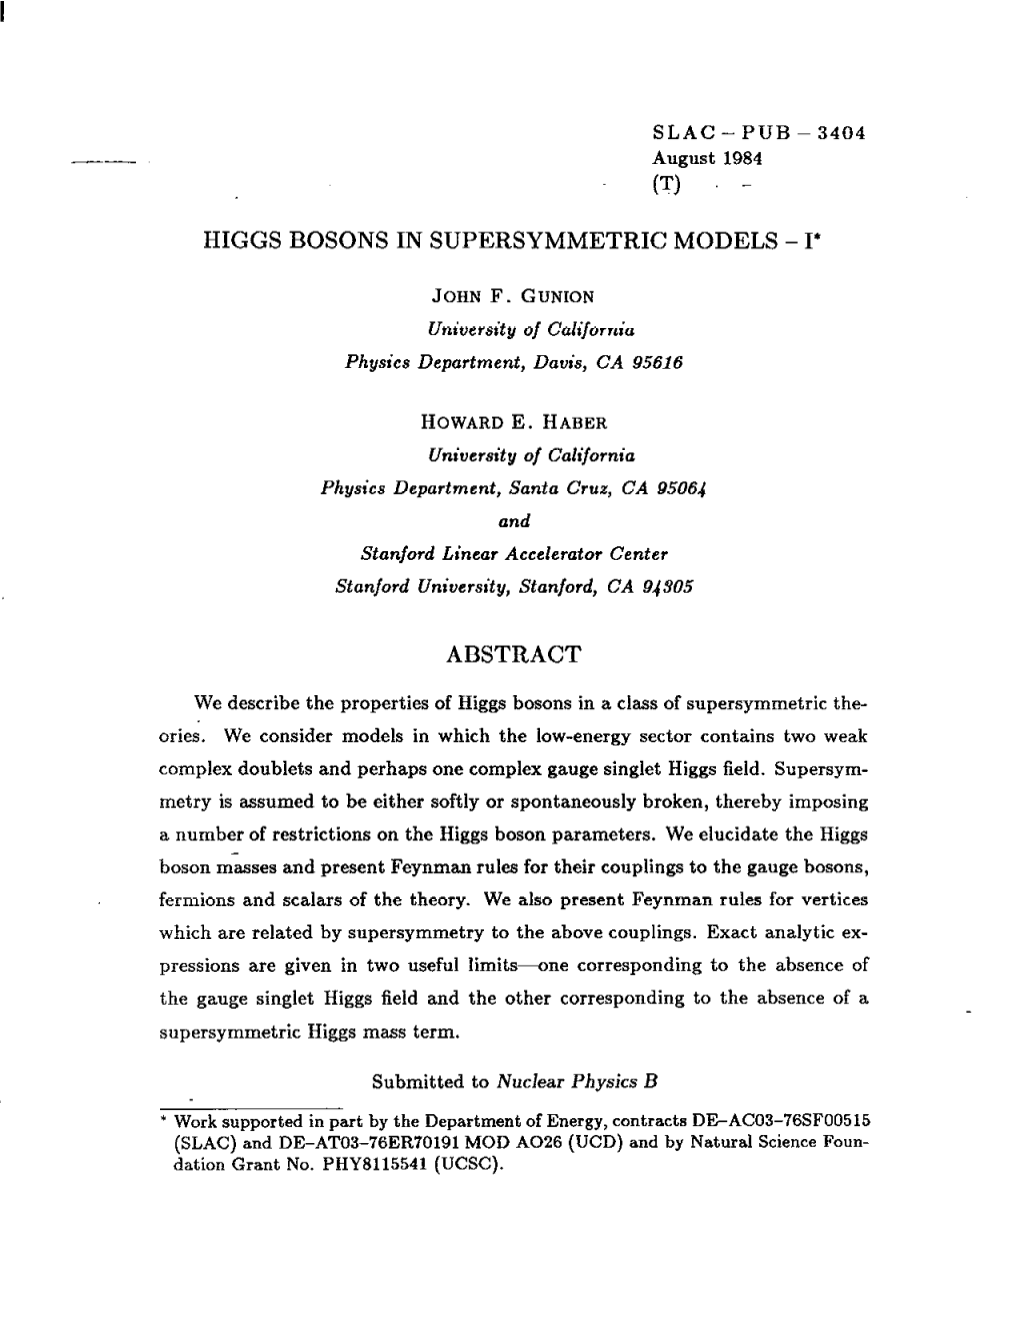 Higgs Bosons in Supersymmetric Models - I*